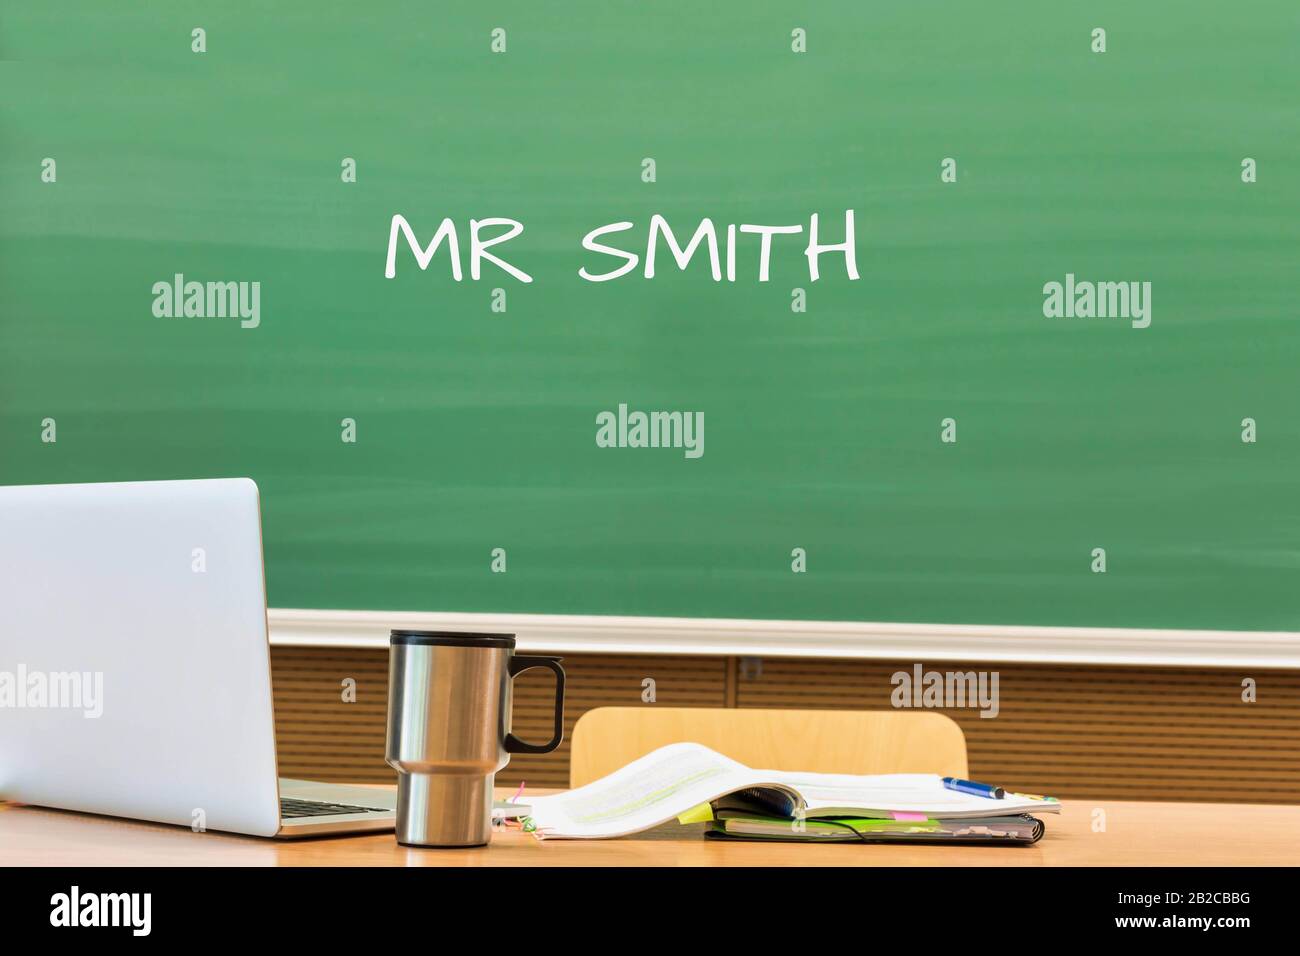 Photo of professor desk in classroom with Mr Smith name written in black board Stock Photo